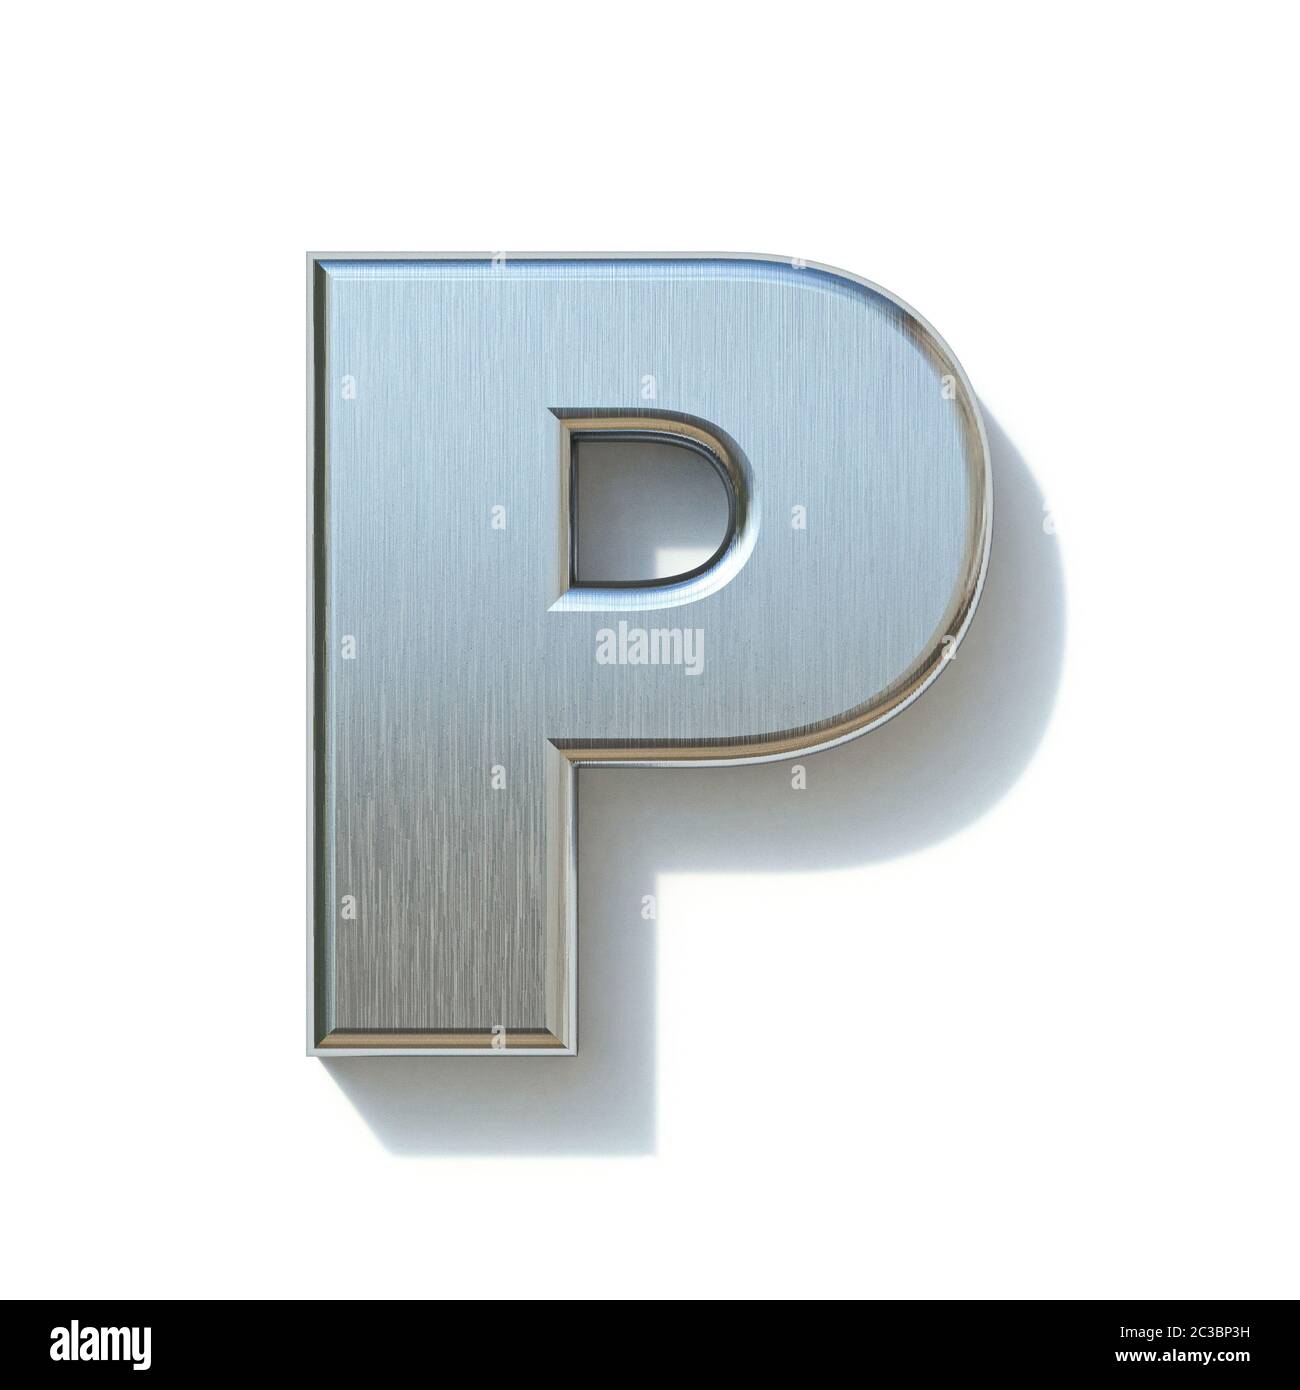 Brushed Metal Font Letter P 3d Render Illustration Isolated On White